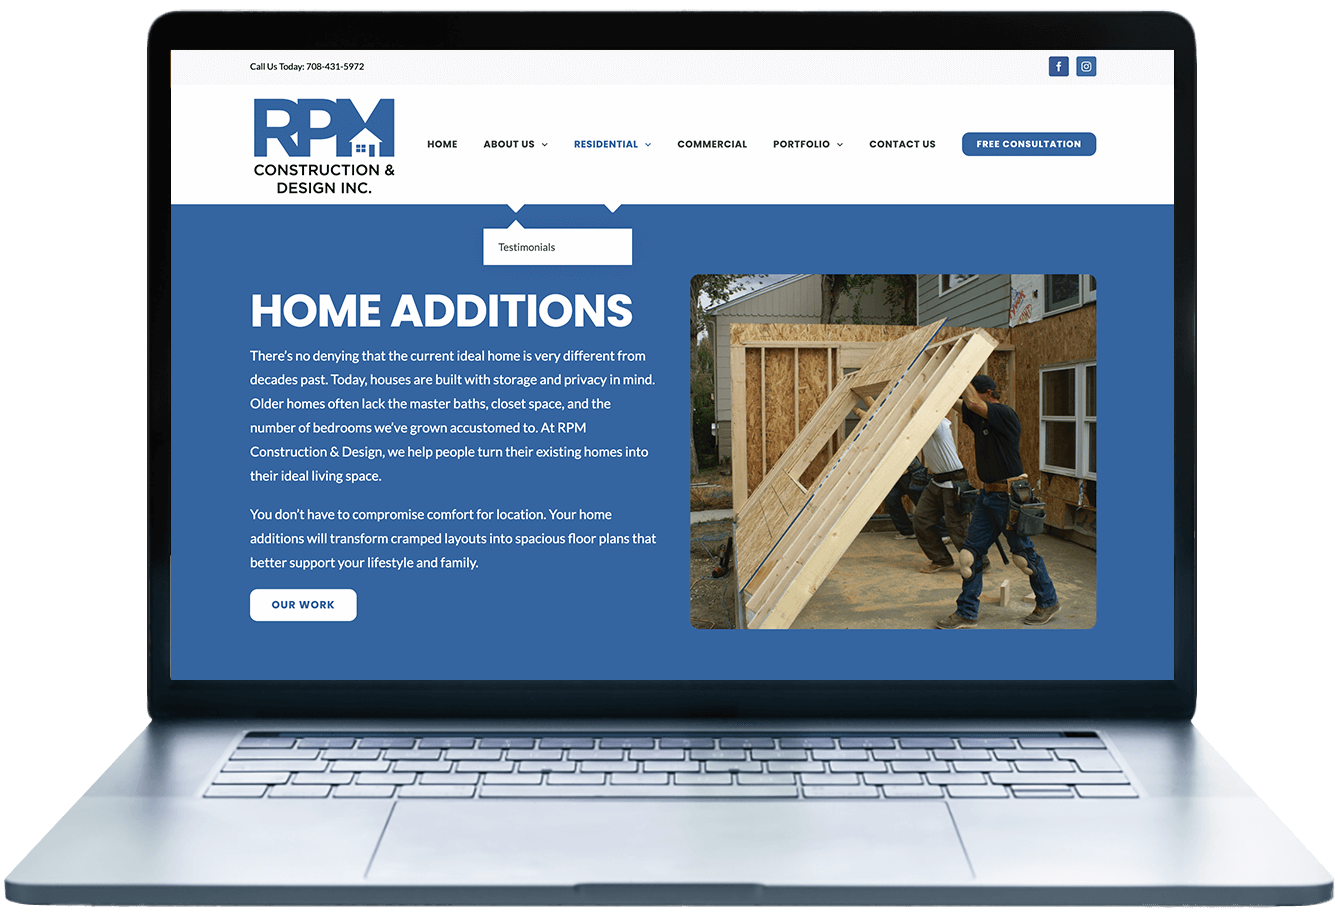 RPM Construction & Design website